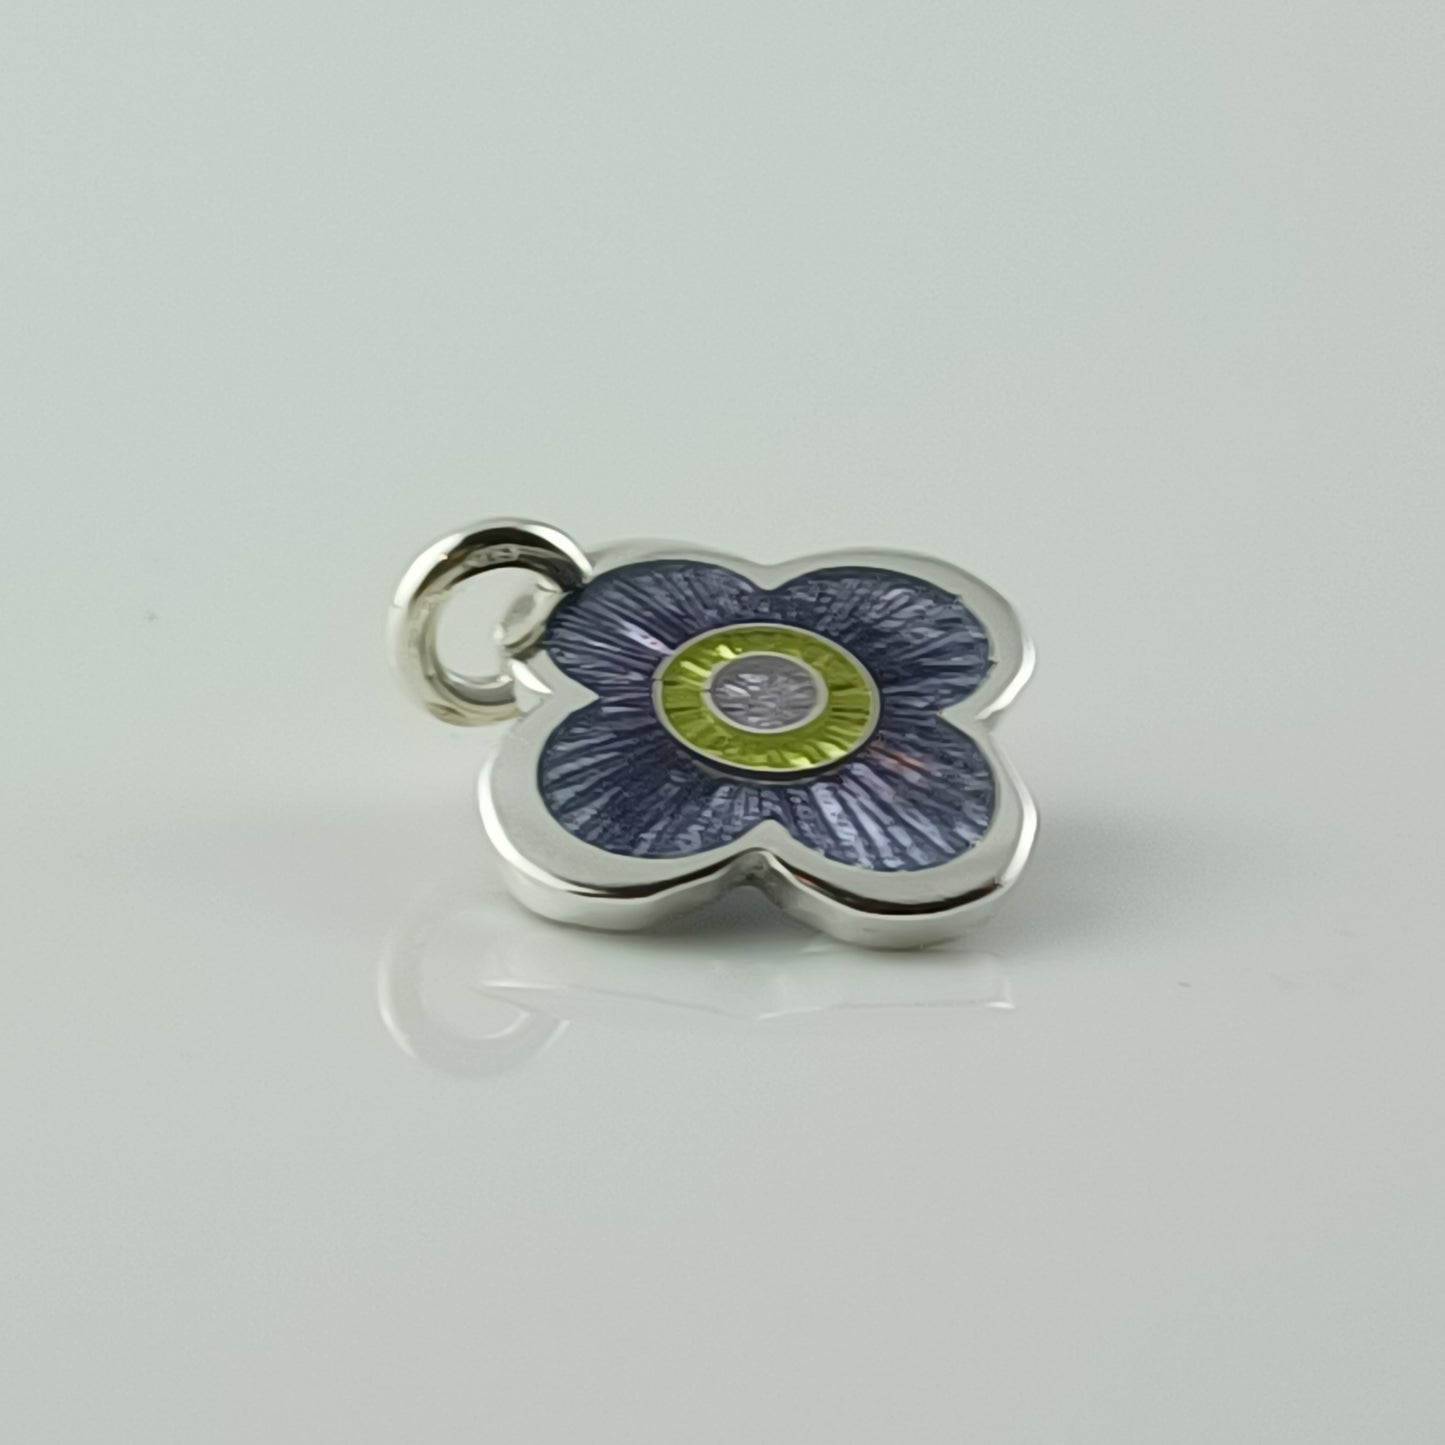 Lilac Flower Pendant - Champleve Vitreous Enamels on Fine Silver (999), Handmade in Australia